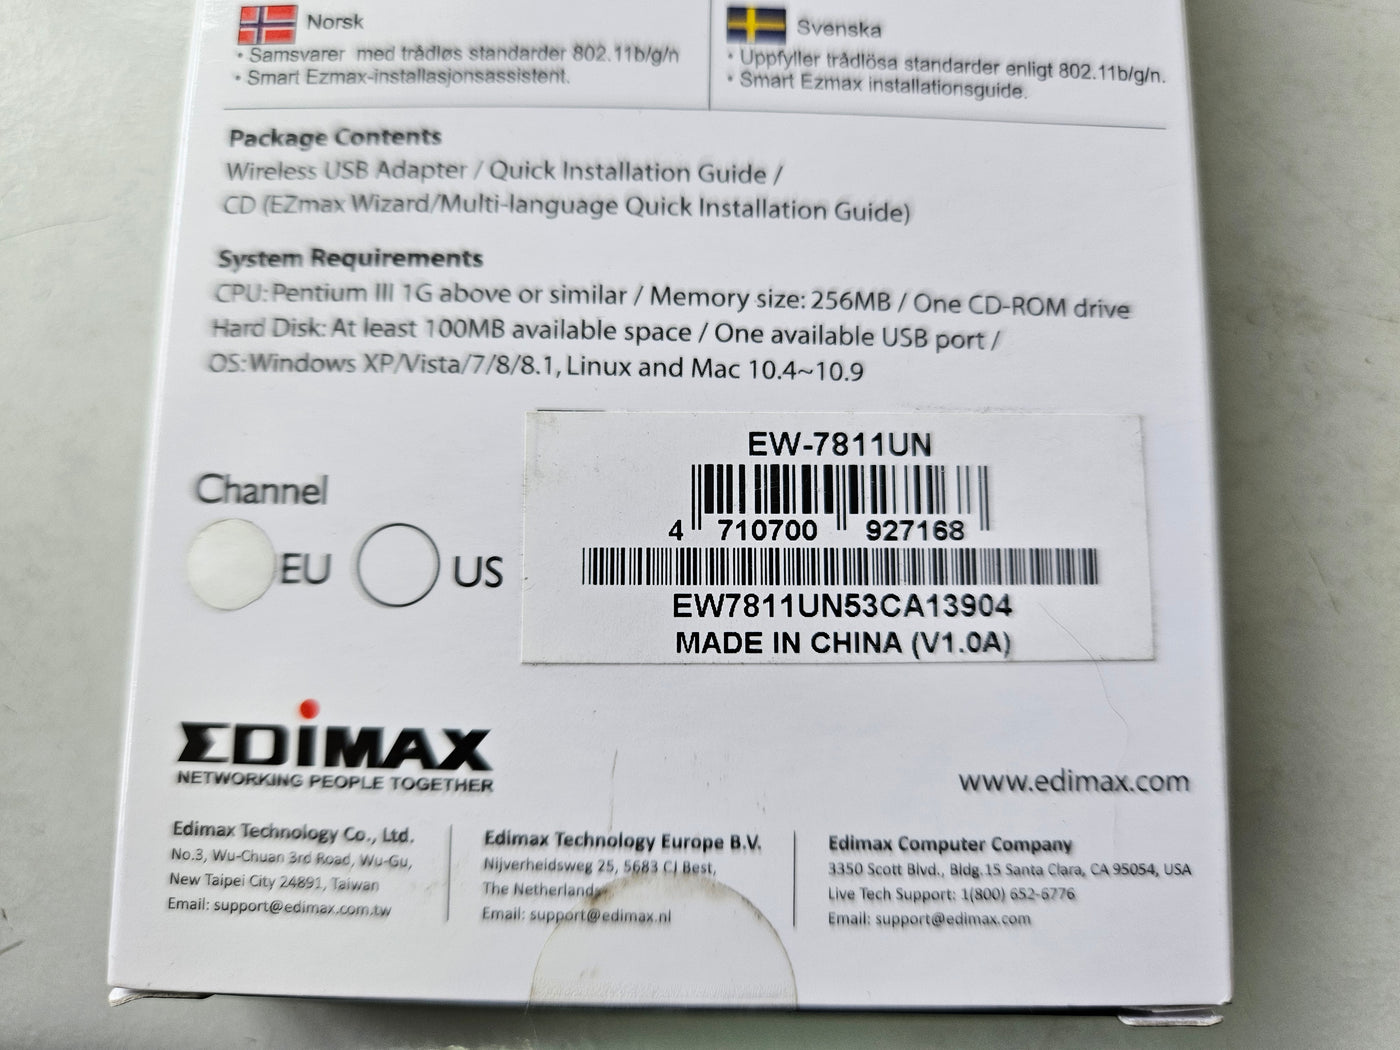 Edimax Wireless 802.11b/g/n nano USB Adapter VER 1 ( EW-7811Un V1 ) NOB